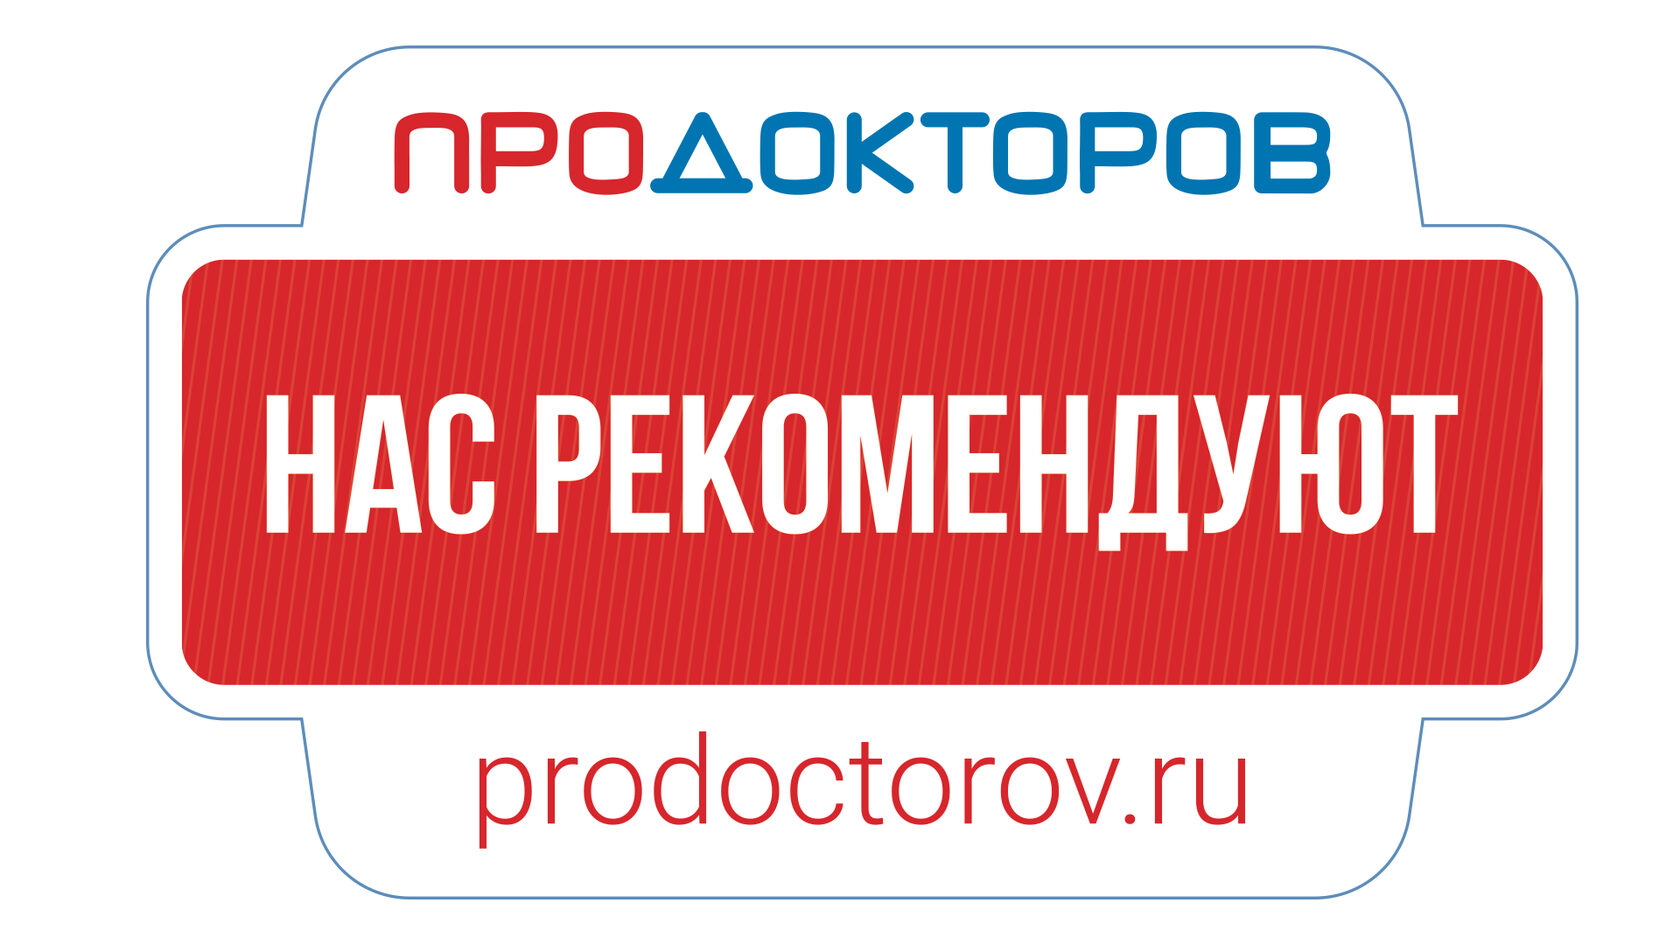 Prodoctorov ru. ПРОДОКТОРОВ лого. Prodoctorov логотип. ПРОДОКТОРОВ.ру. Доктор.